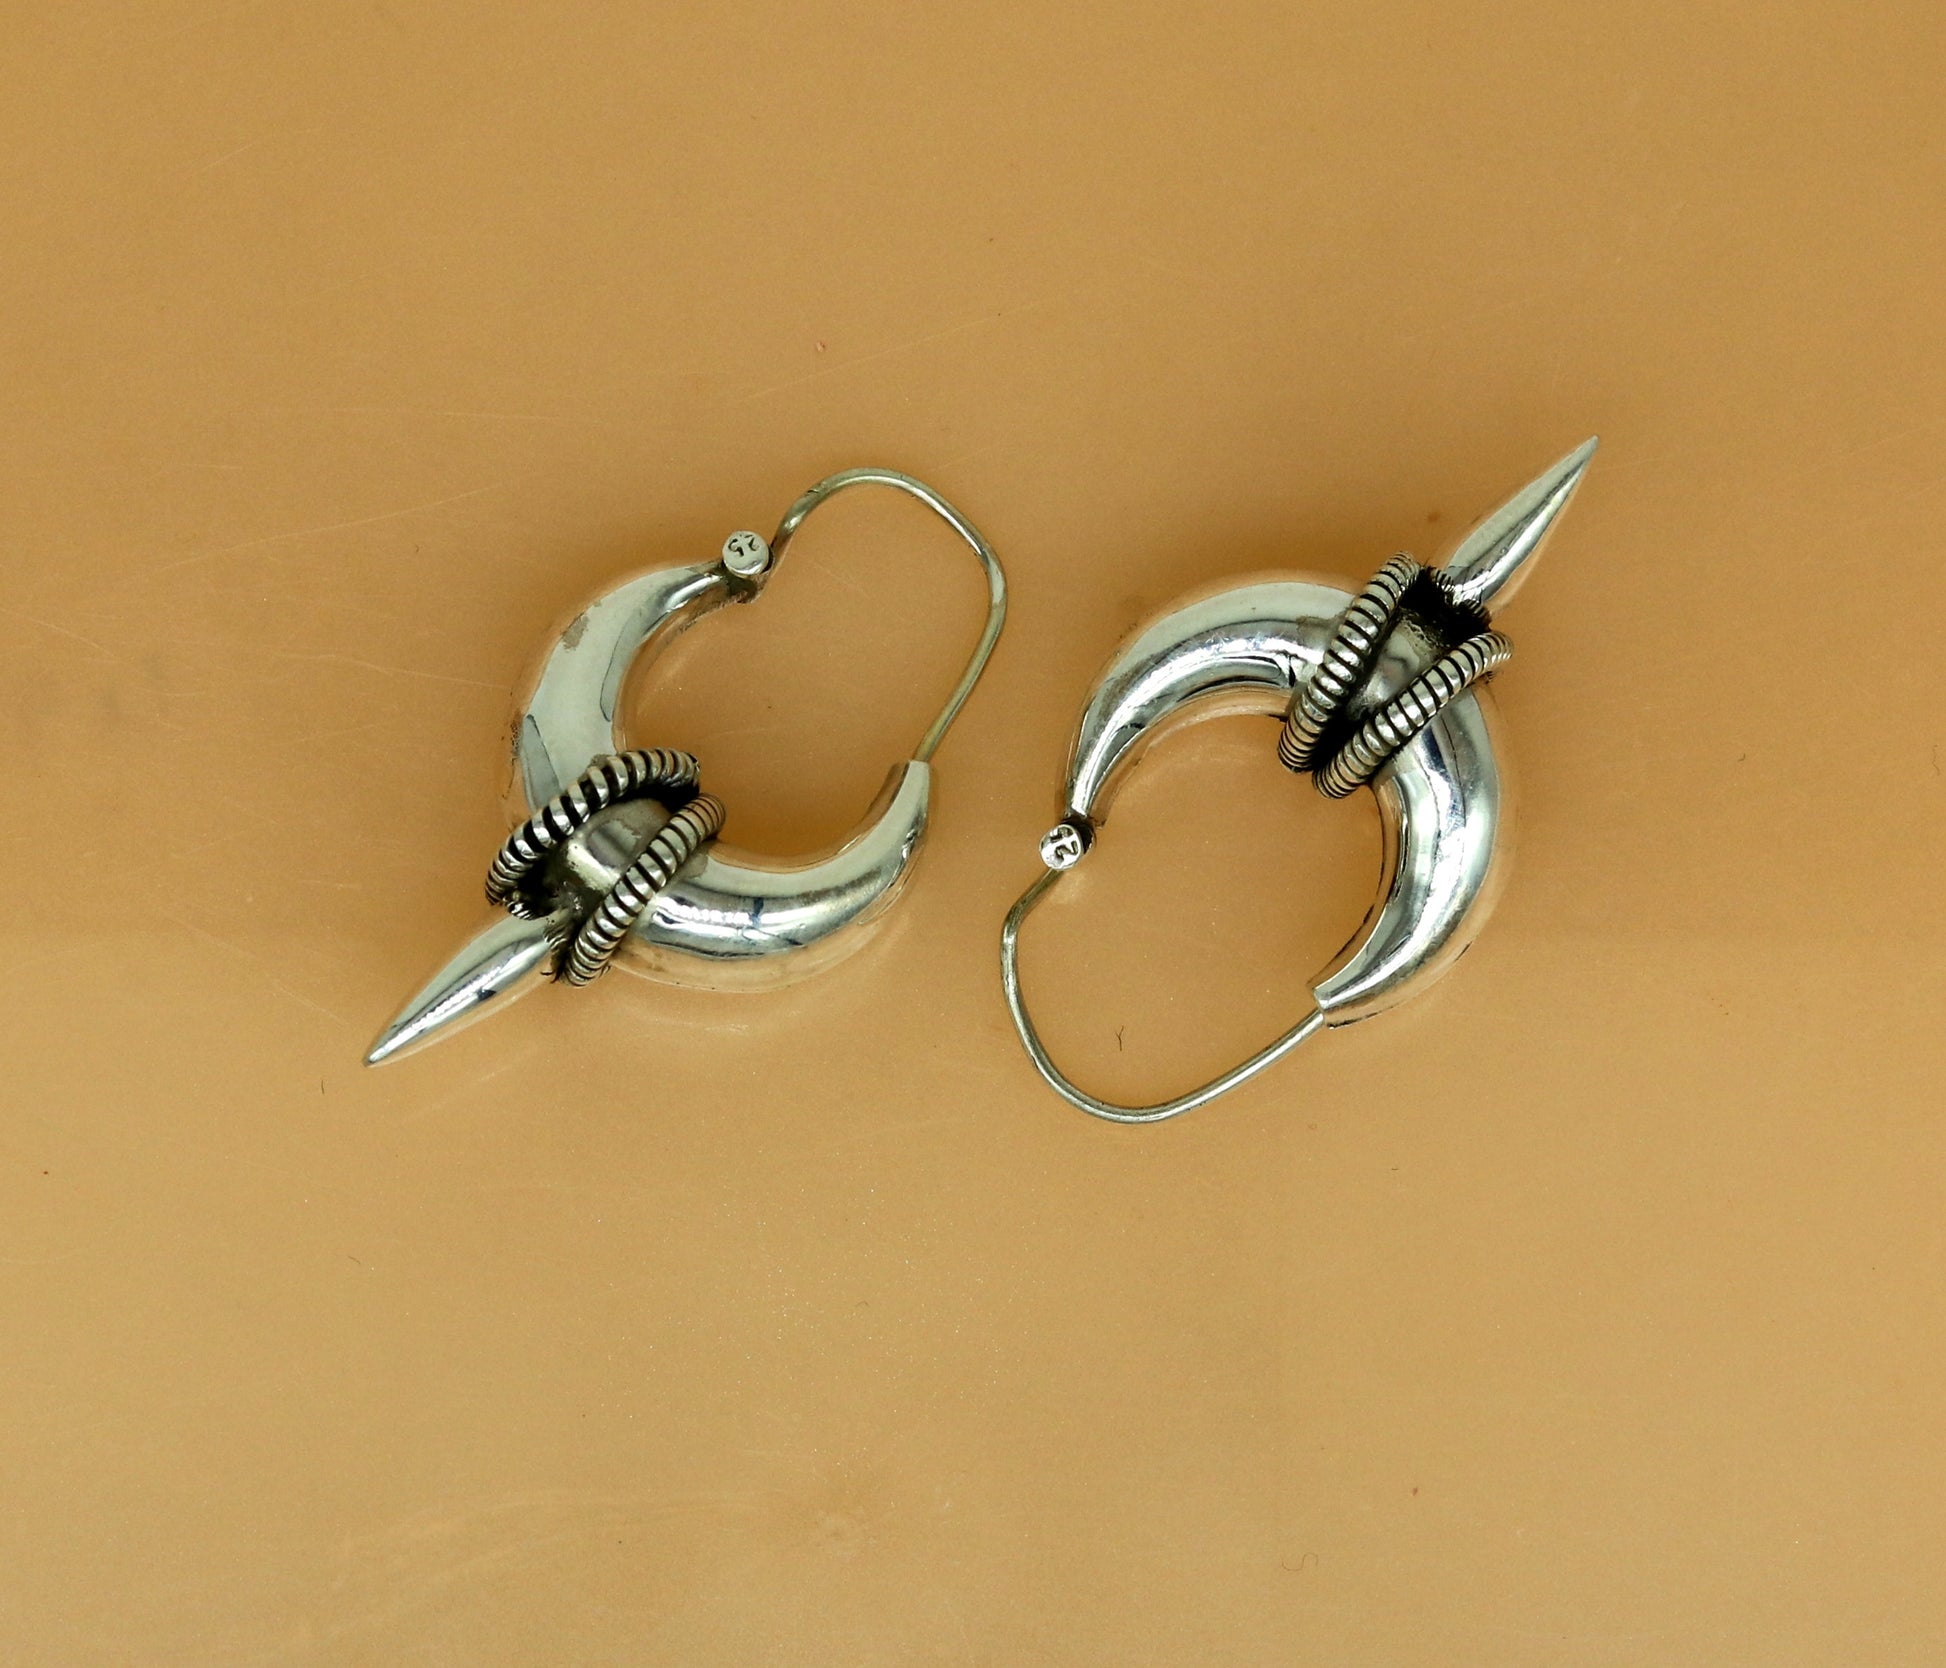 Pure 925 sterling Handmade silver jewelry, fabulous vintage stylish customized hoops earrings bali tribal ethnic personalized jewelry ske6 - TRIBAL ORNAMENTS